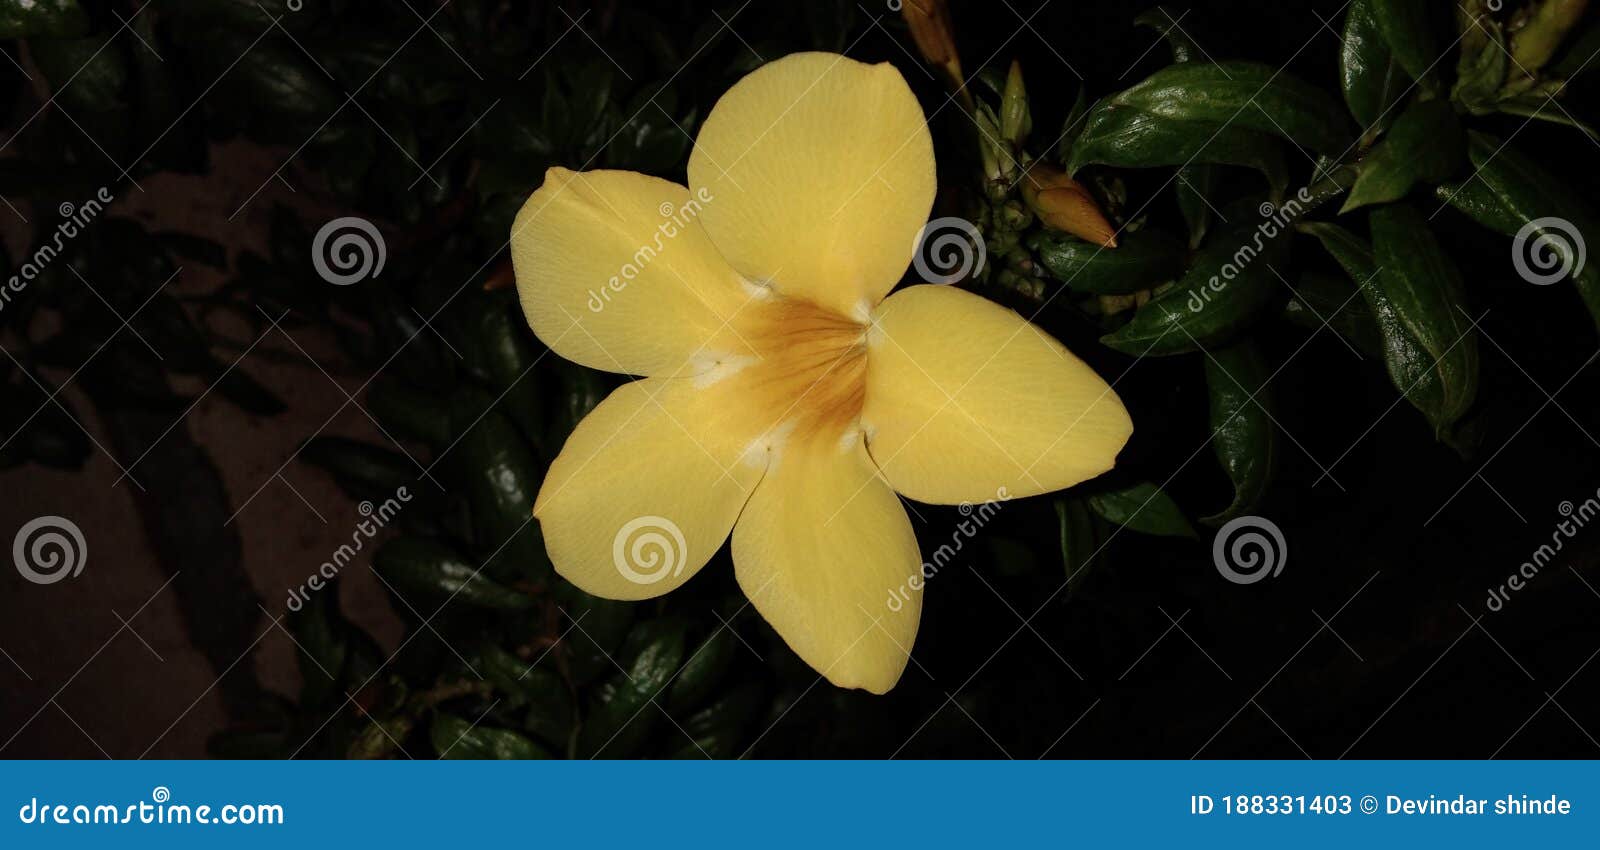 dolichandra unguis-cati || allamanda cathartica beautiful flower